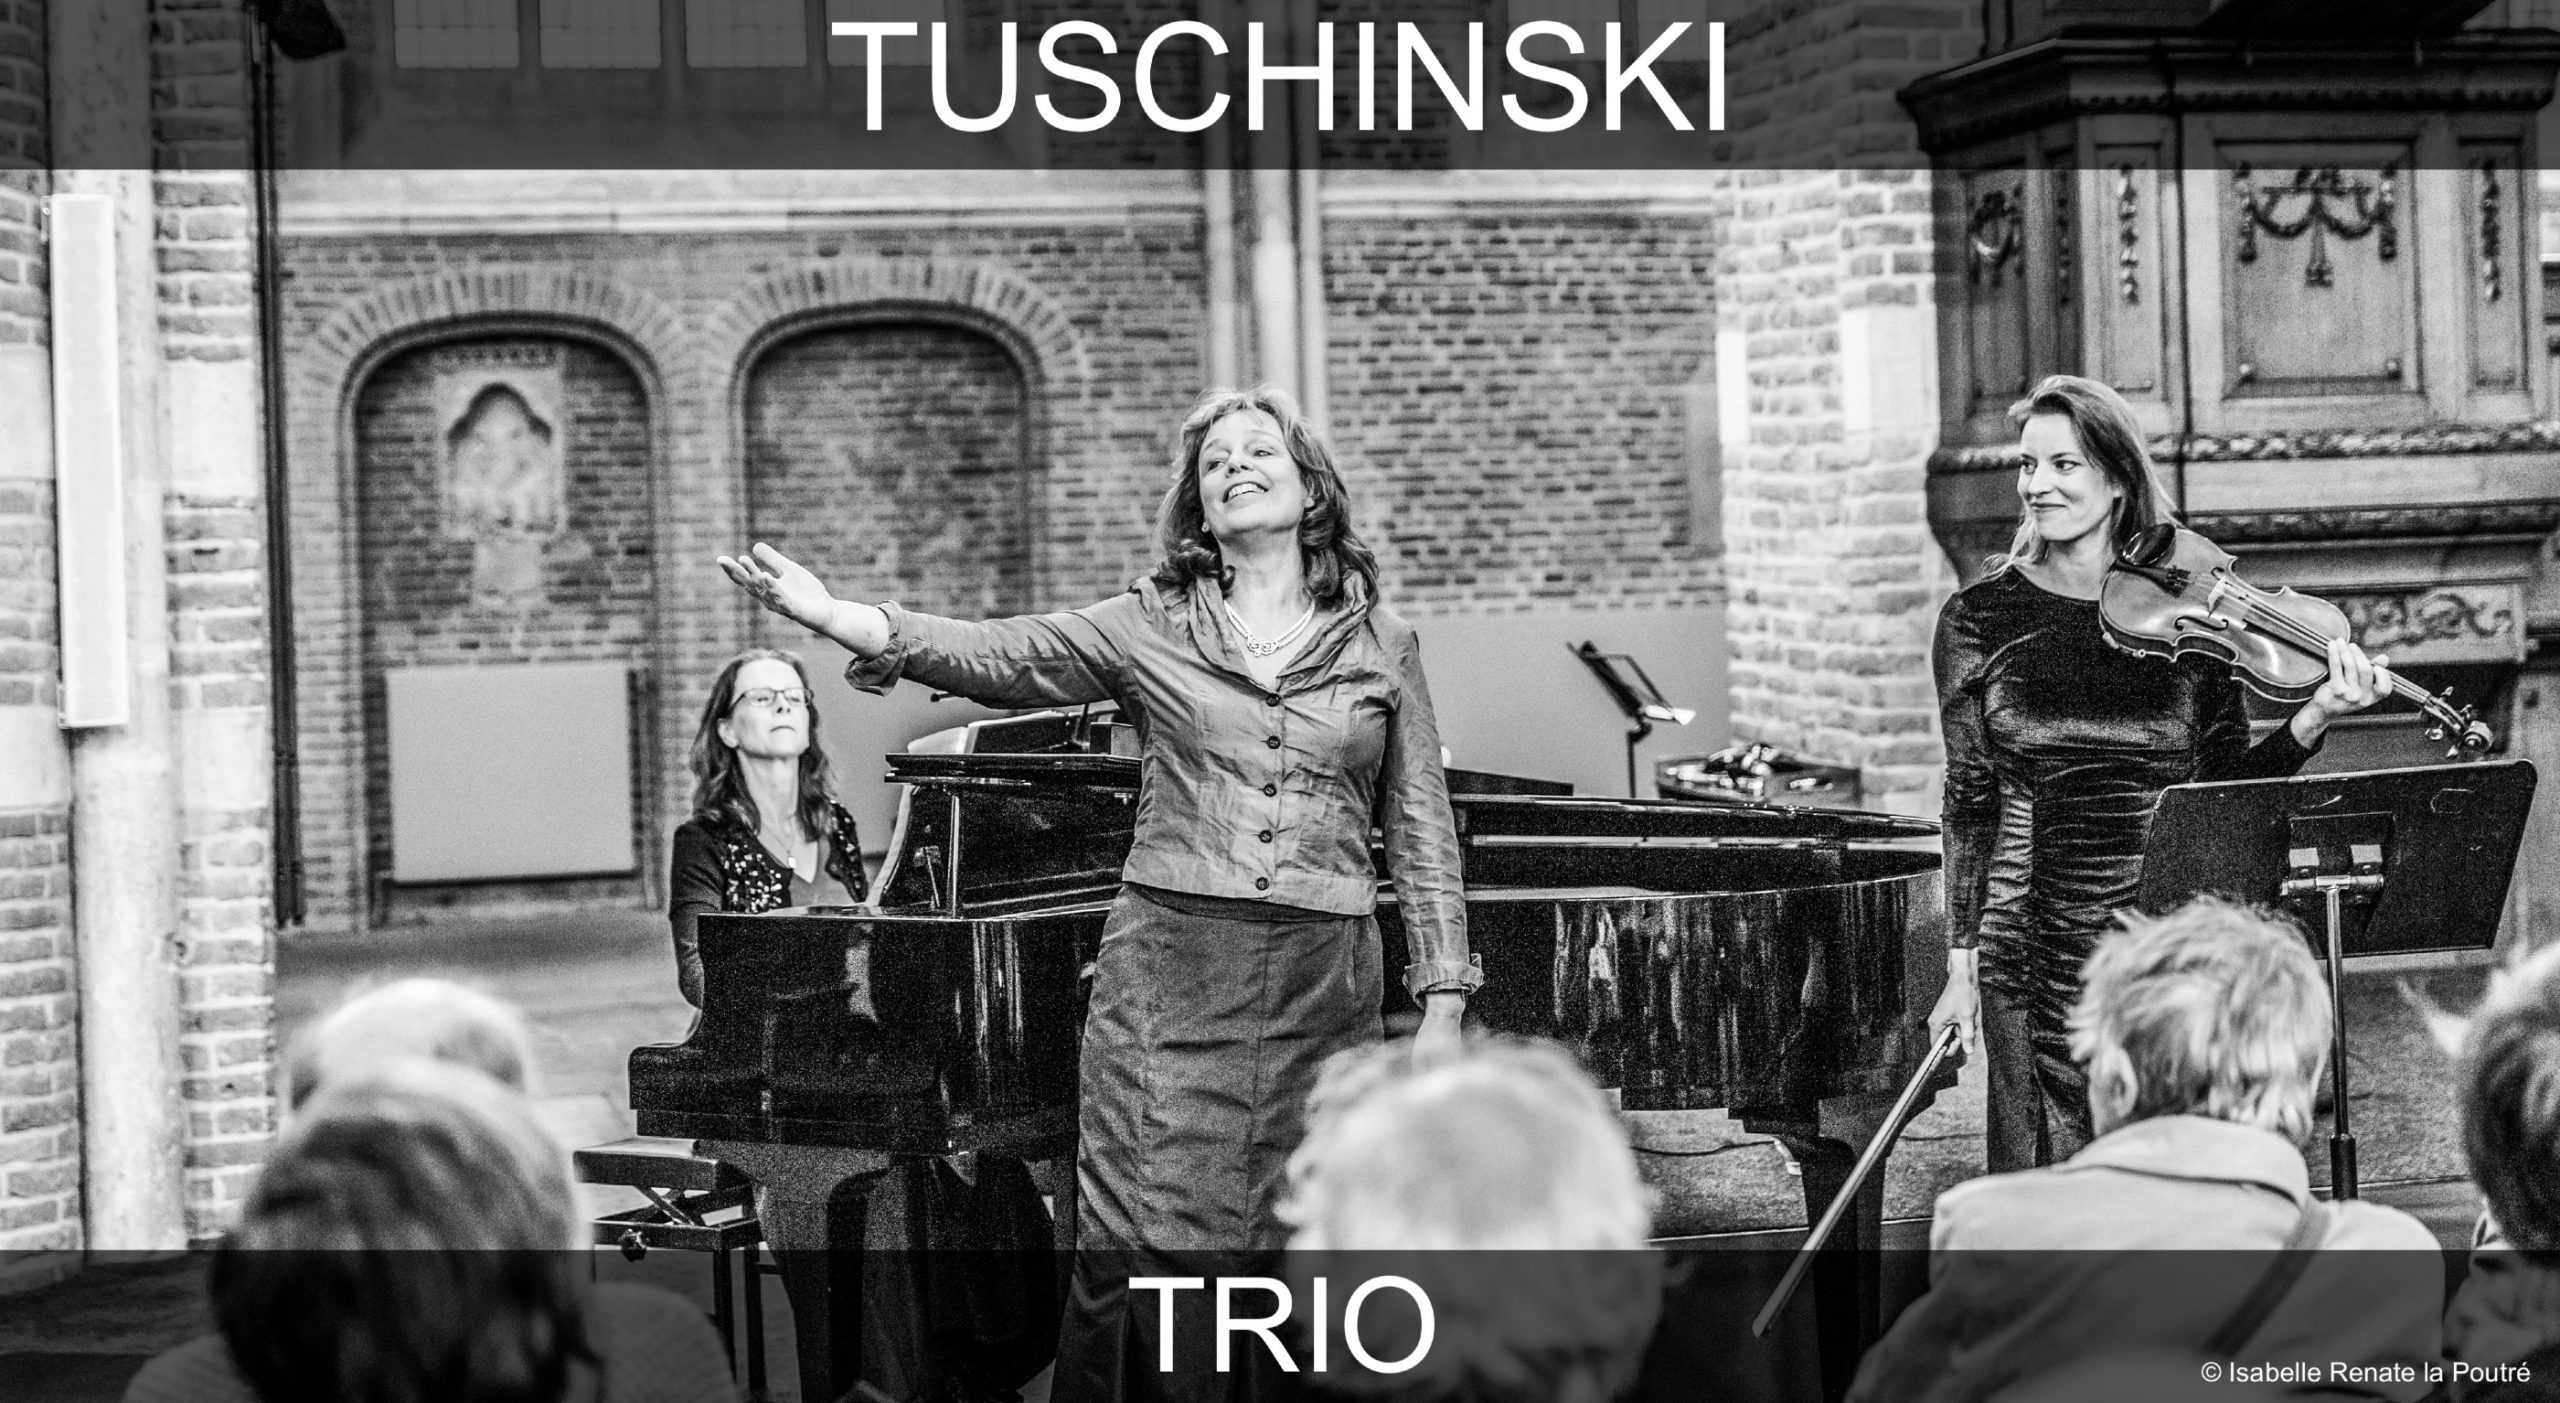 Het Tuschinski Trio - “An Unexpected Journey"